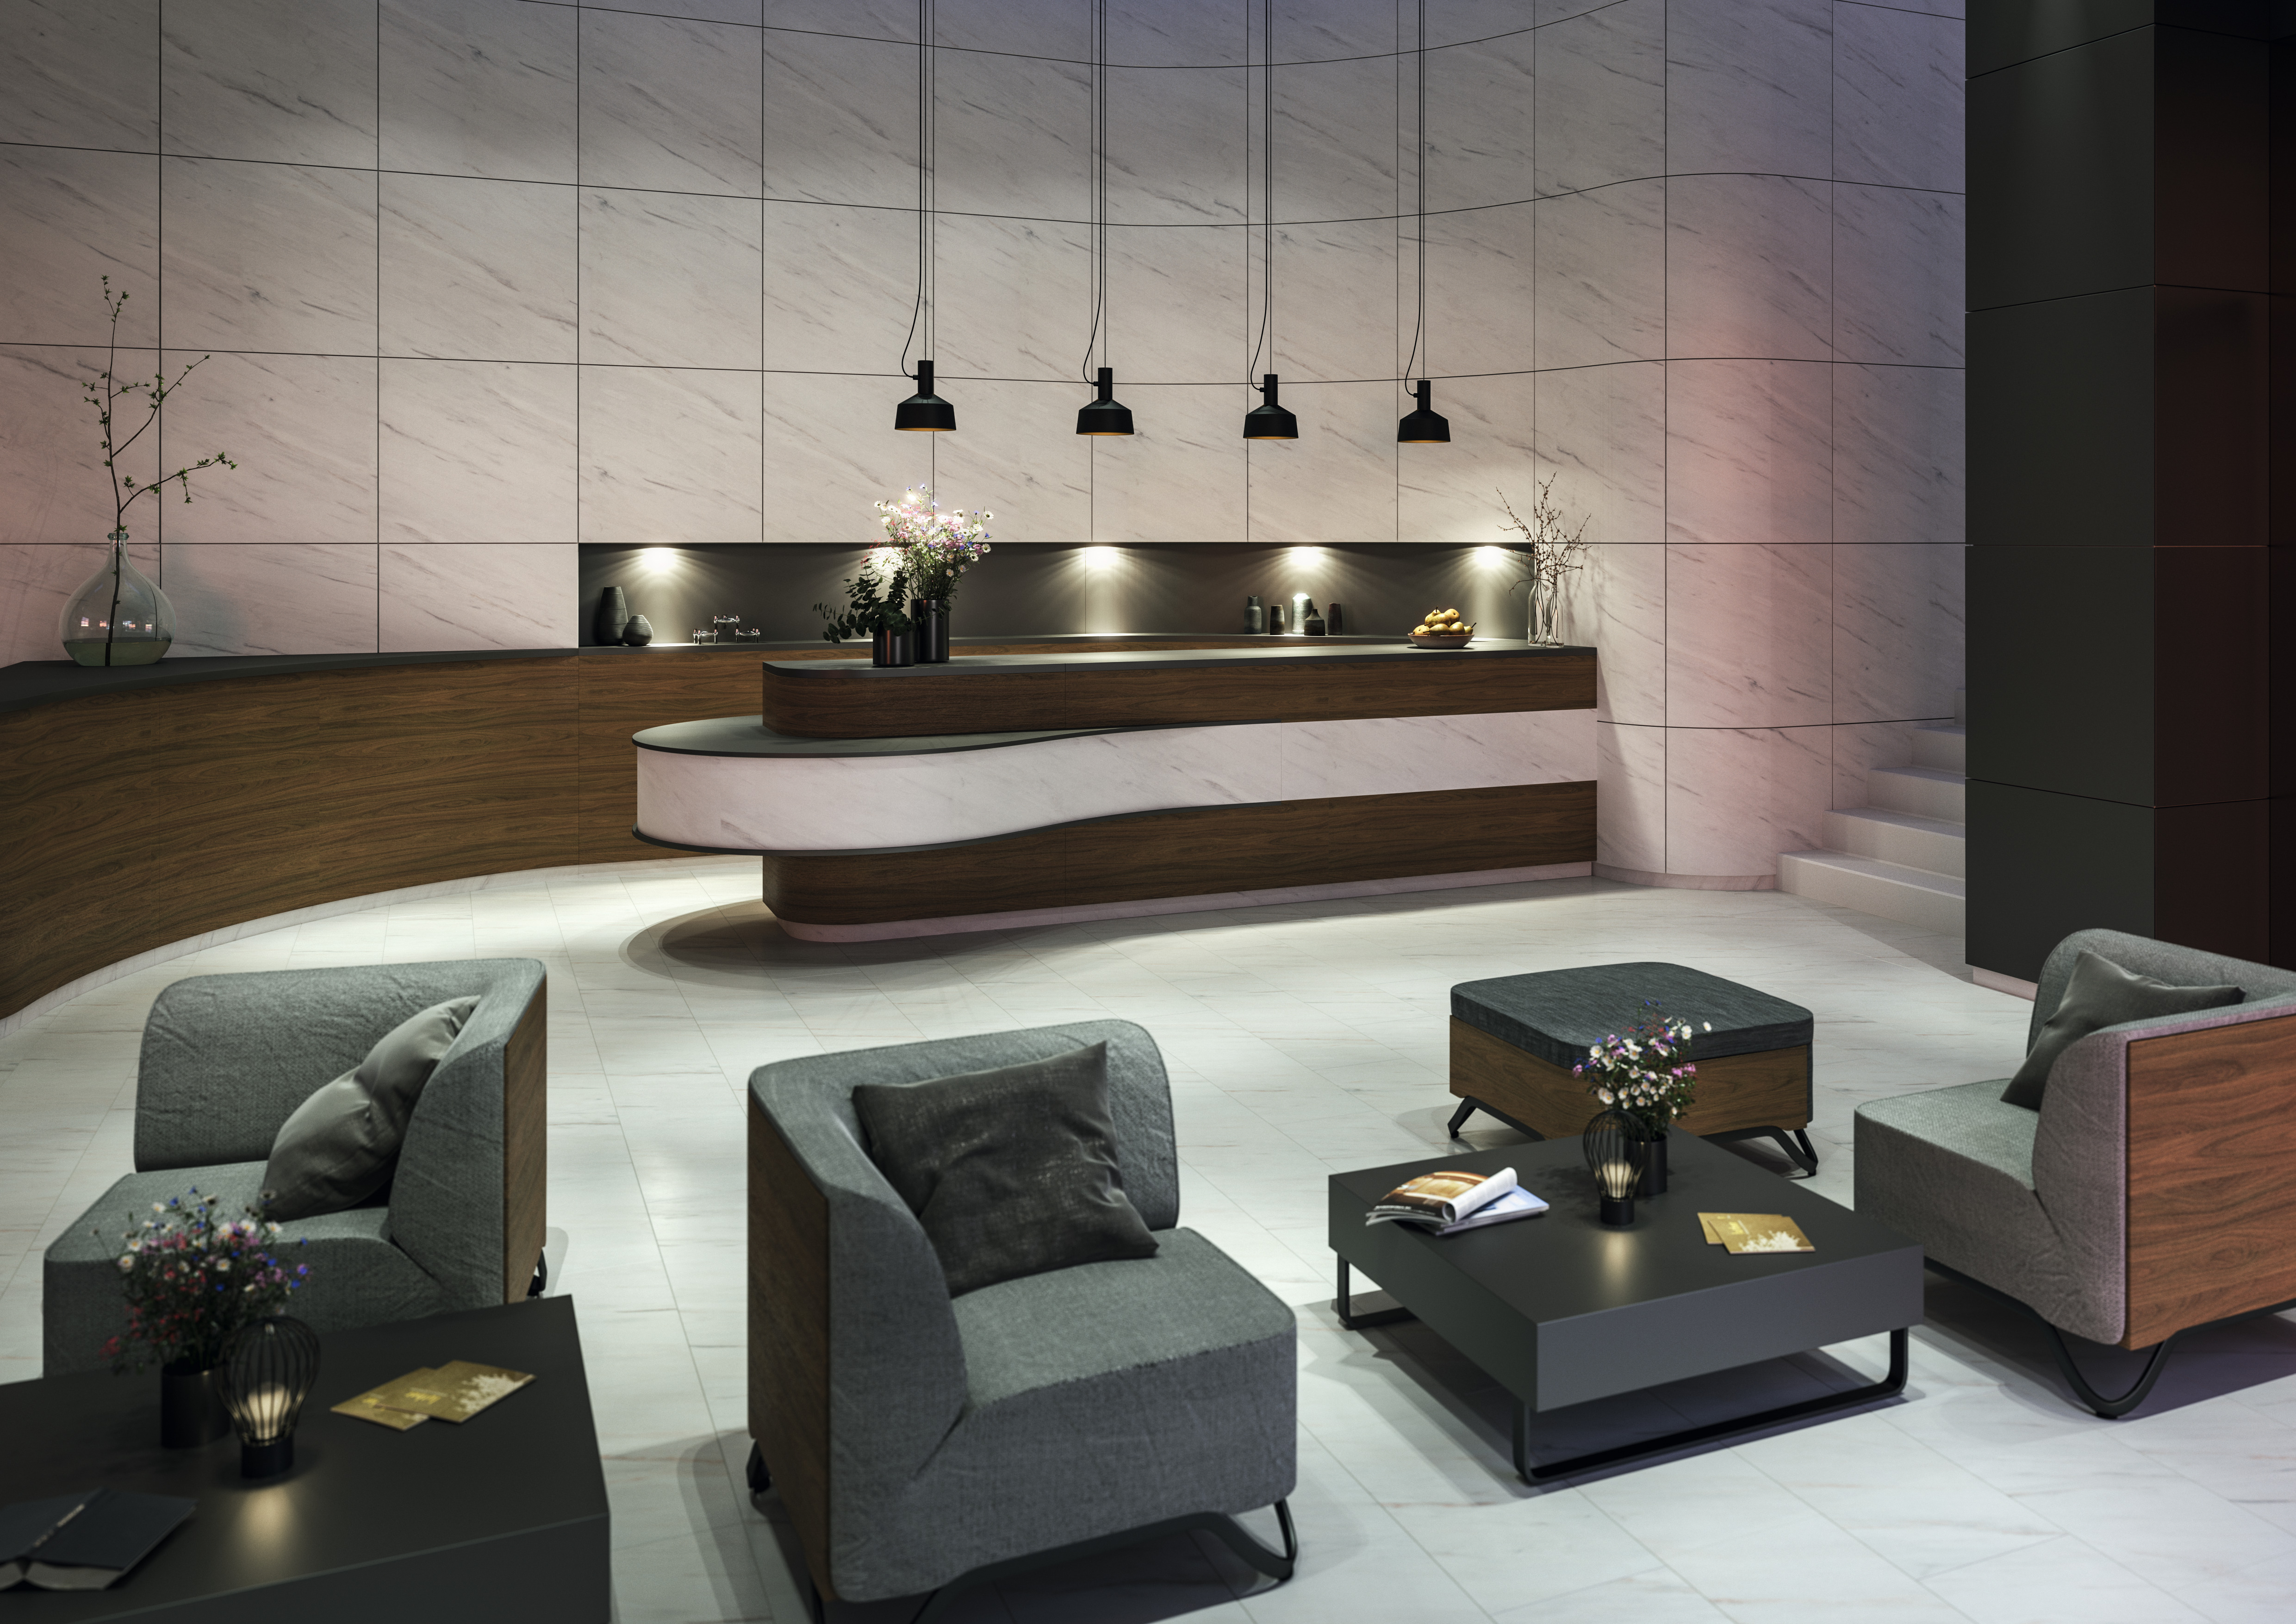 Decor Match hotel lobby: White Levanto Marble. Reception front and rear wall: Laminate | Flooring: Laminate Flooring Aqua+